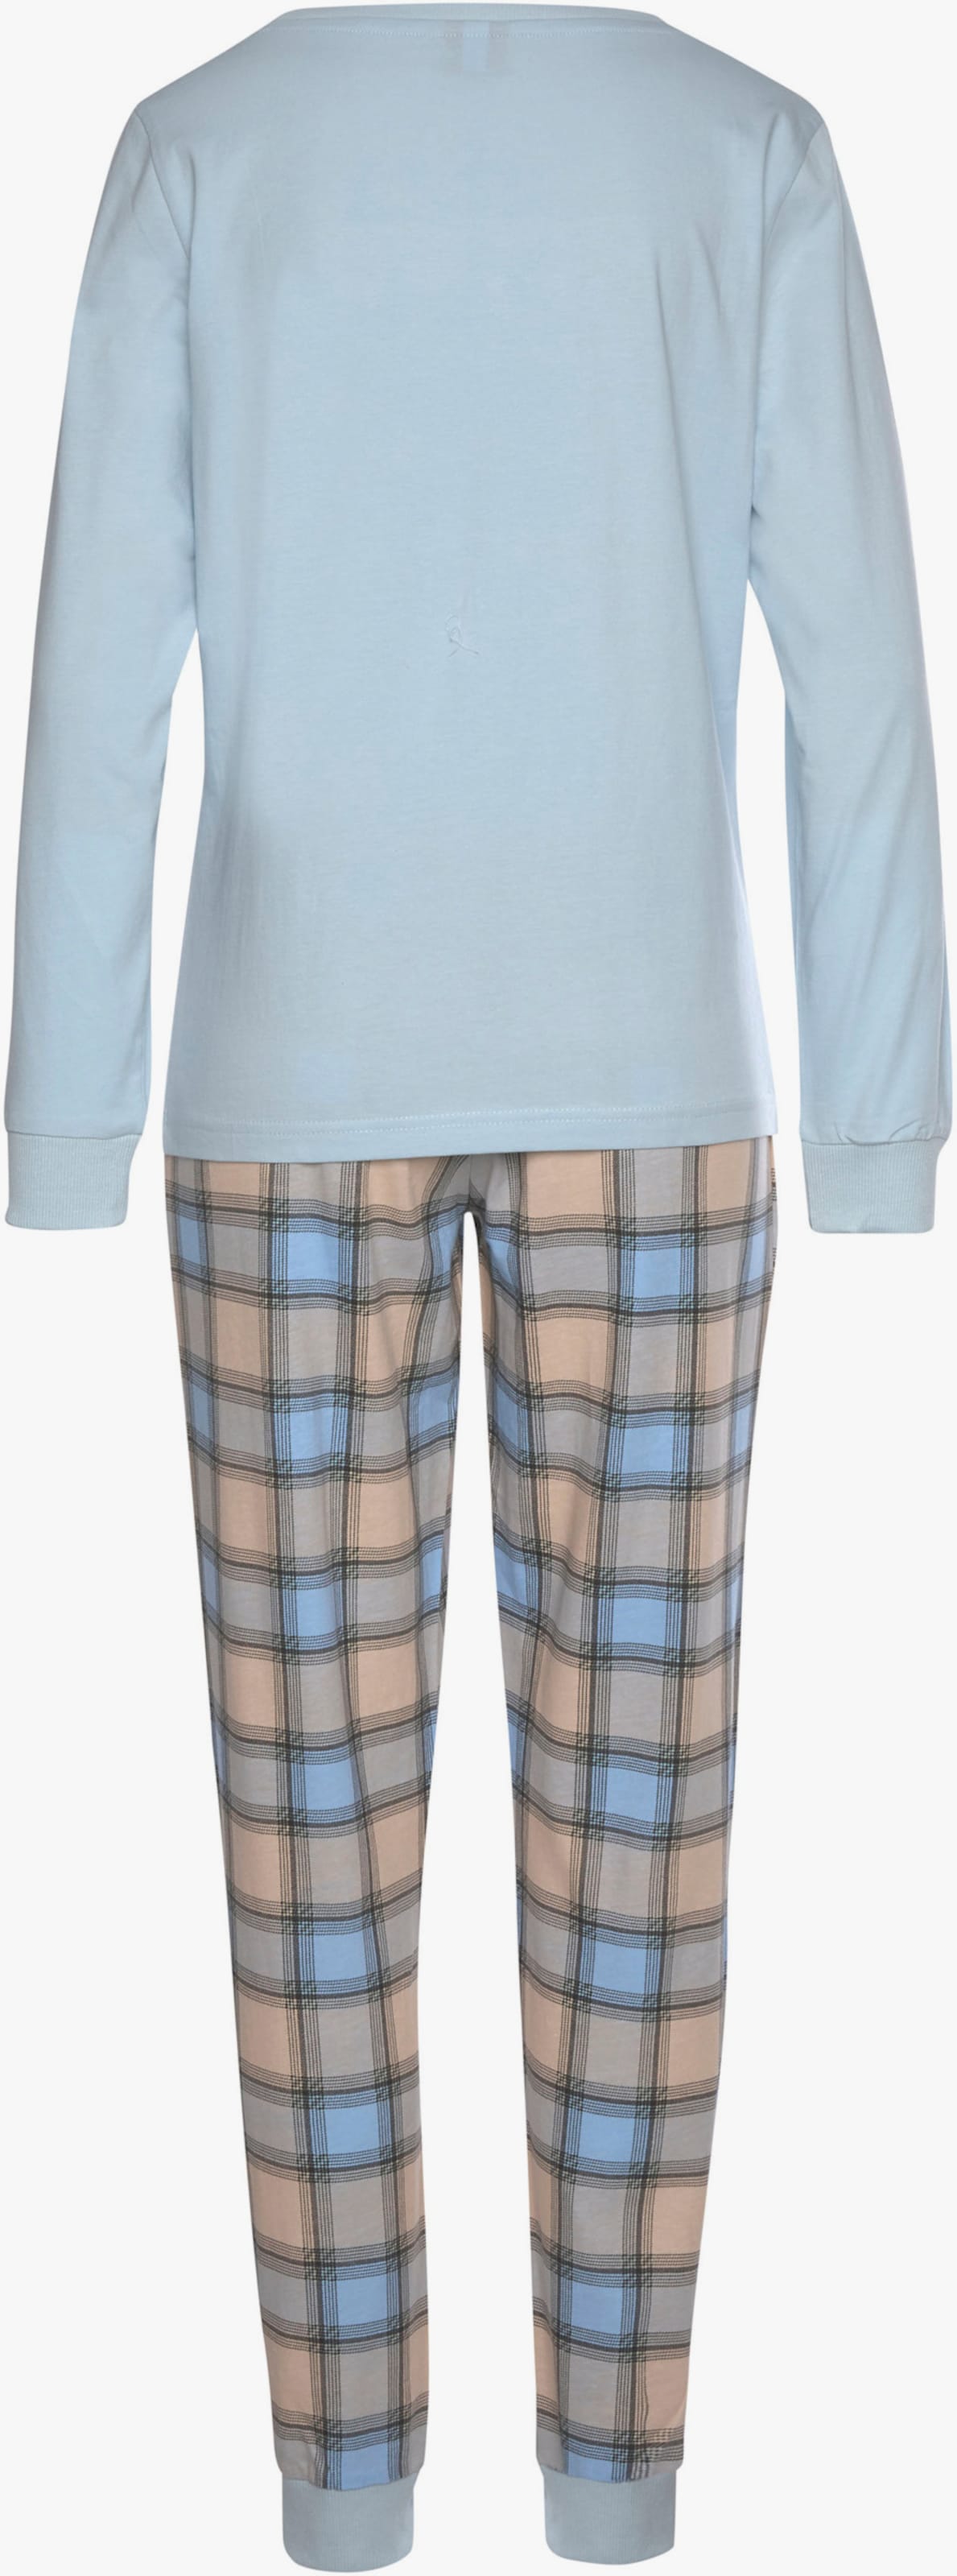 Vivance Dreams Pyjama - bordeaux geruit, lichtblauw geruit